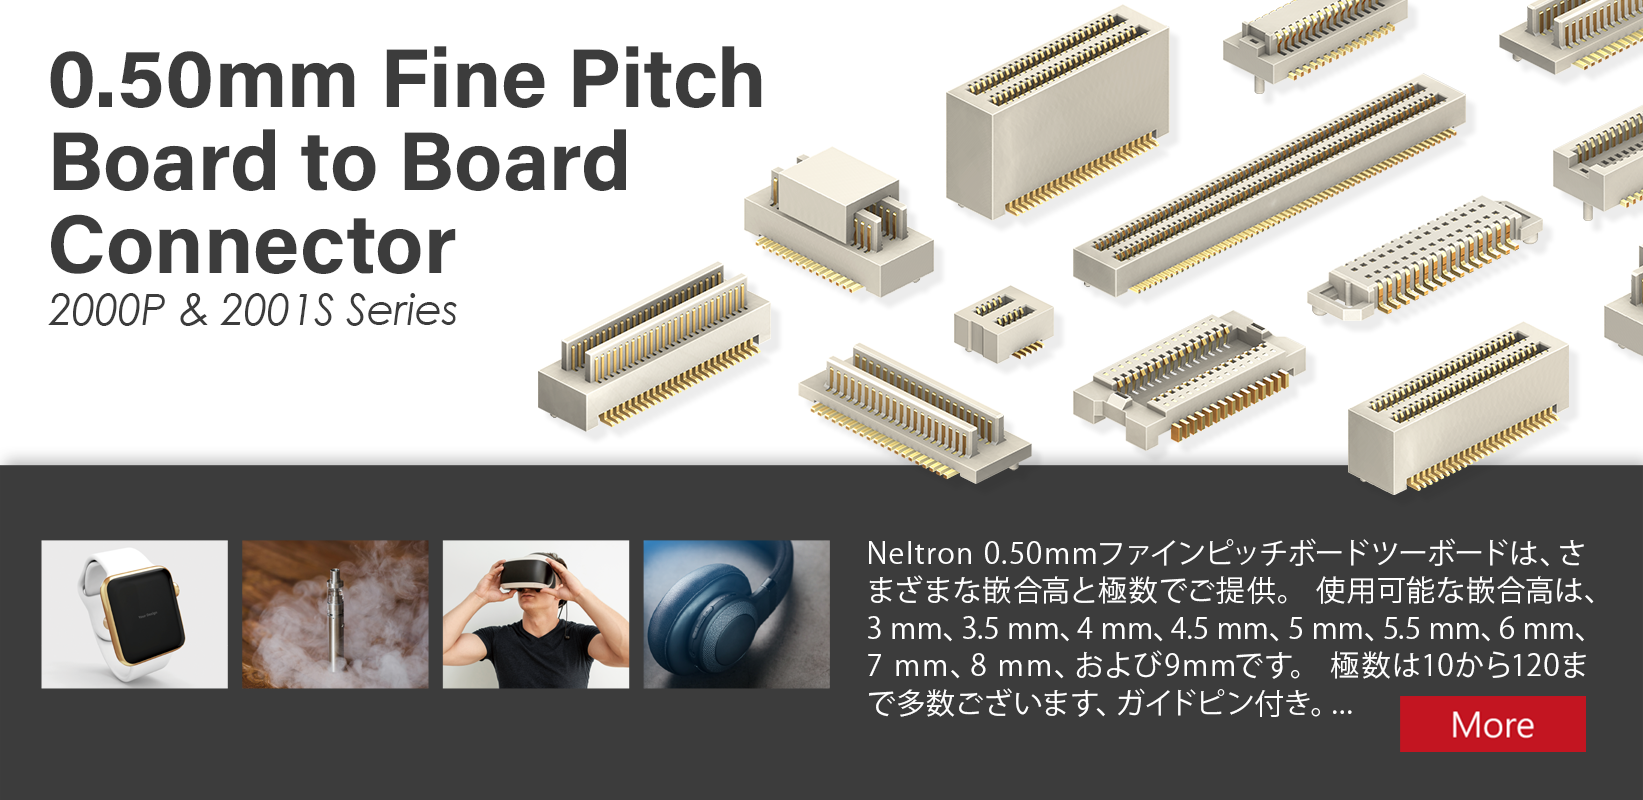 0.50mm Fine Pitch Board to Board